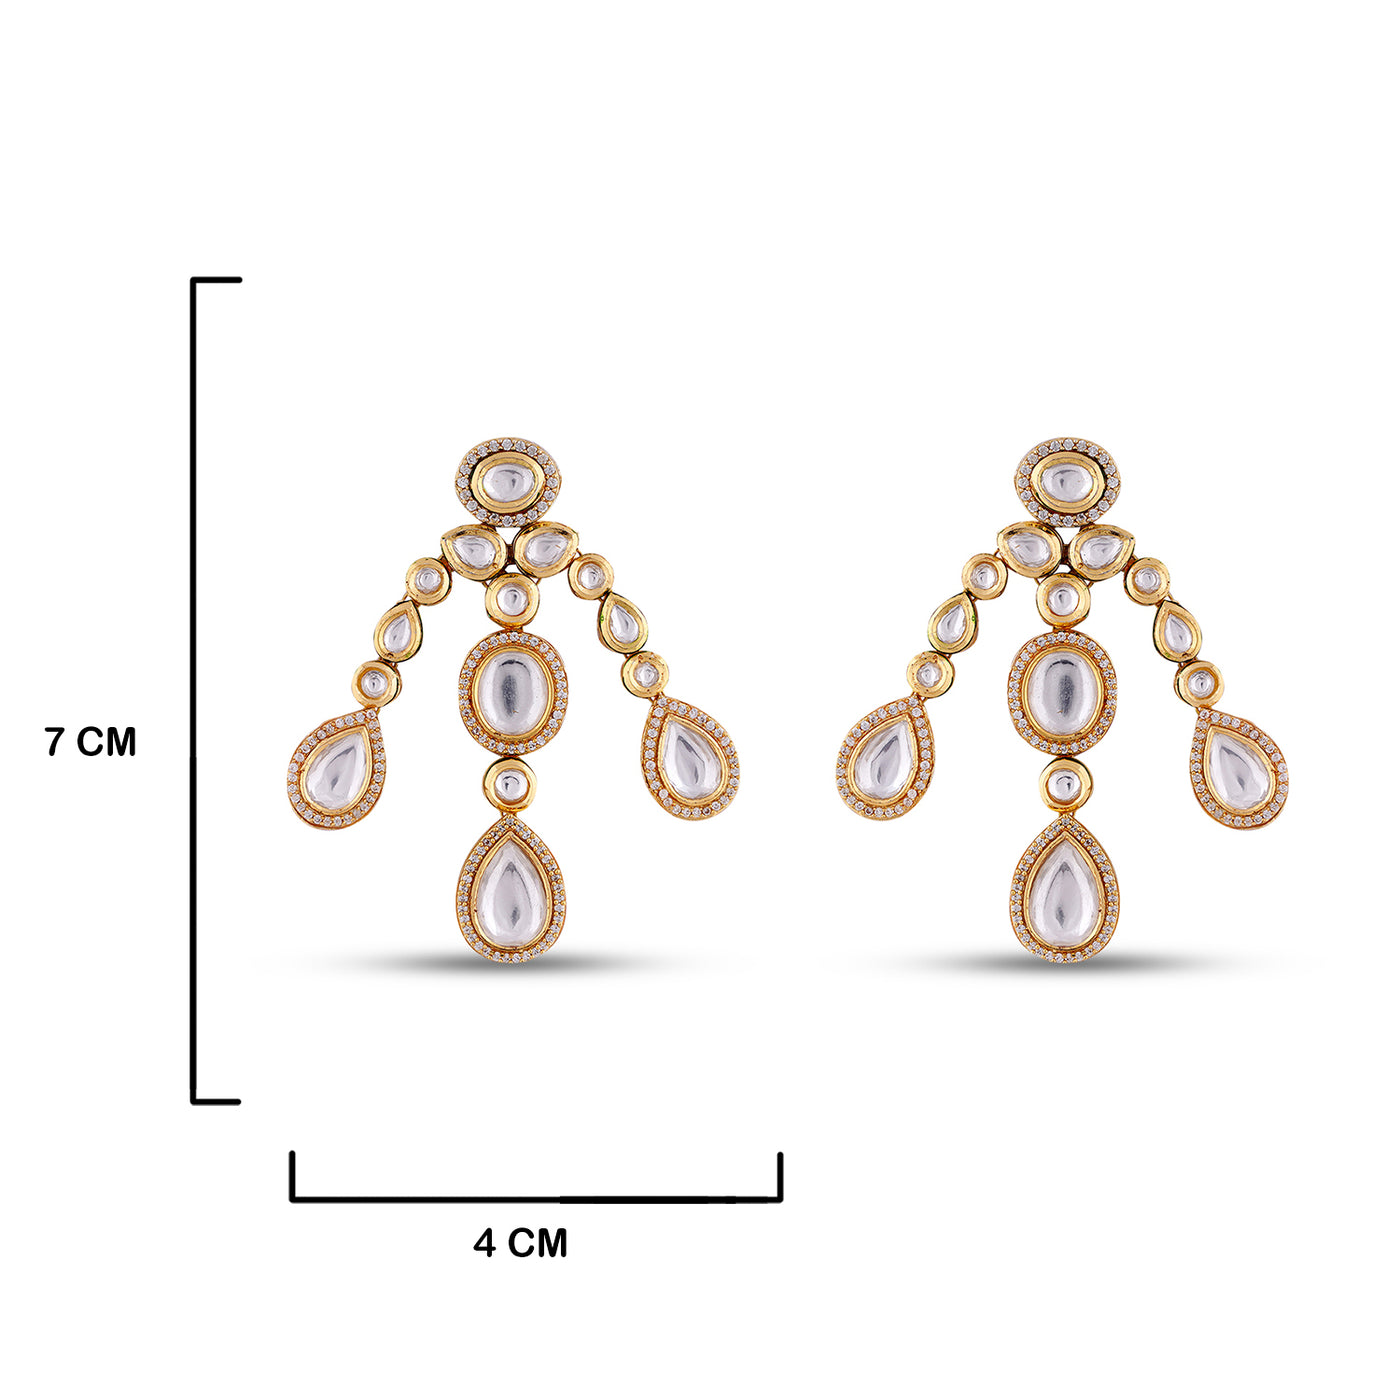 Polki Studded Kundan Earrings with measurements in cm. 7cm by 4cm.